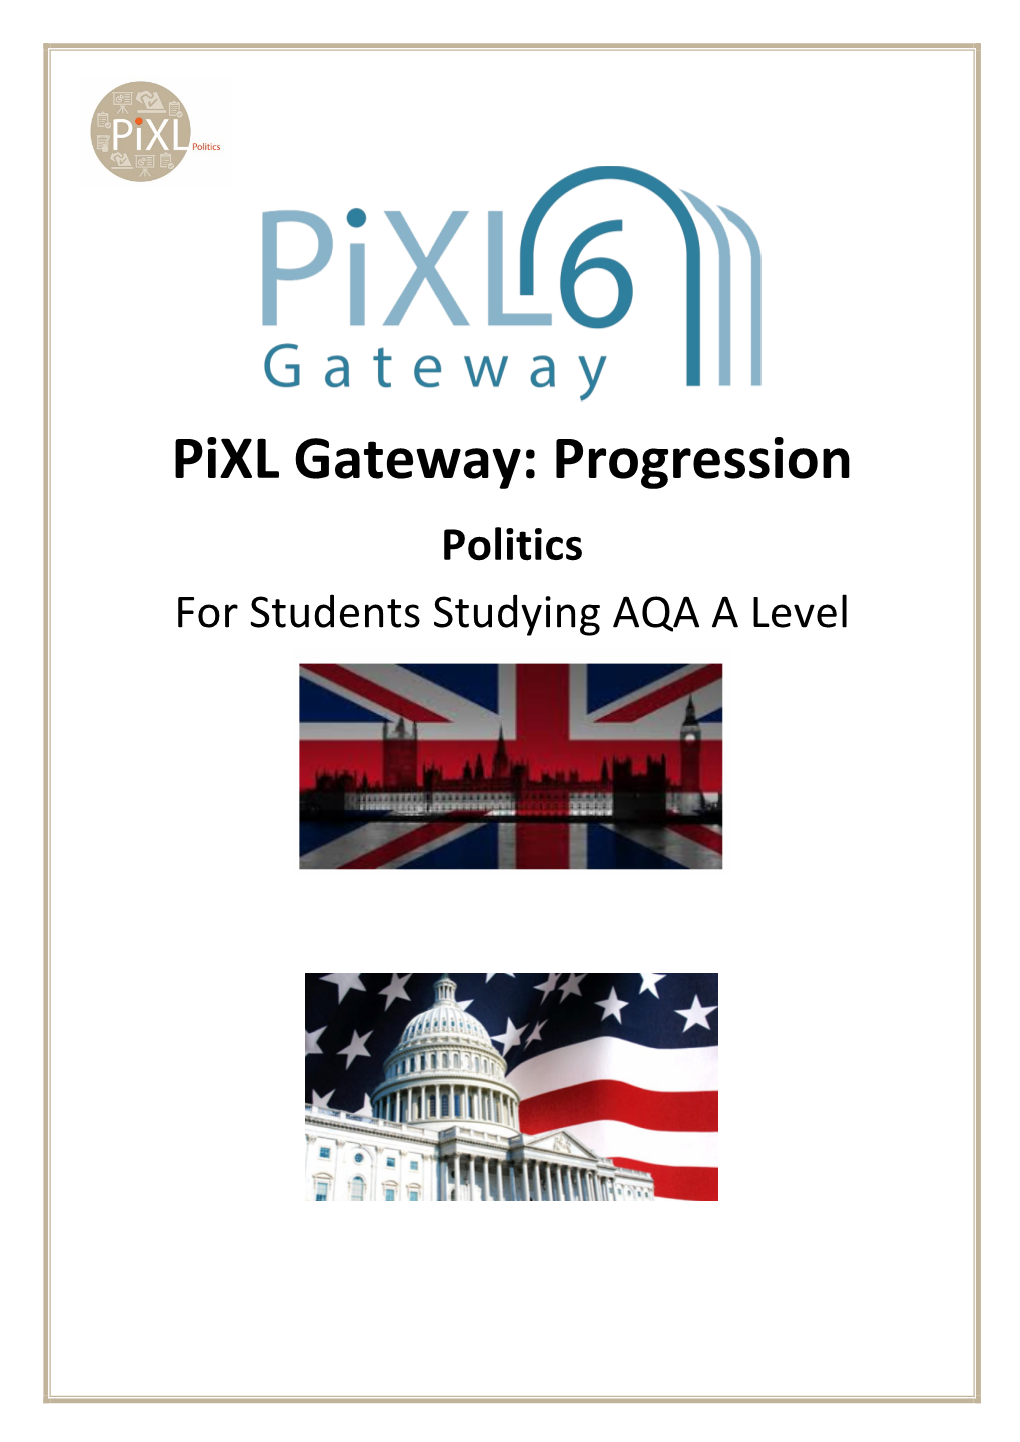 Politics for Students Studying AQA a Level